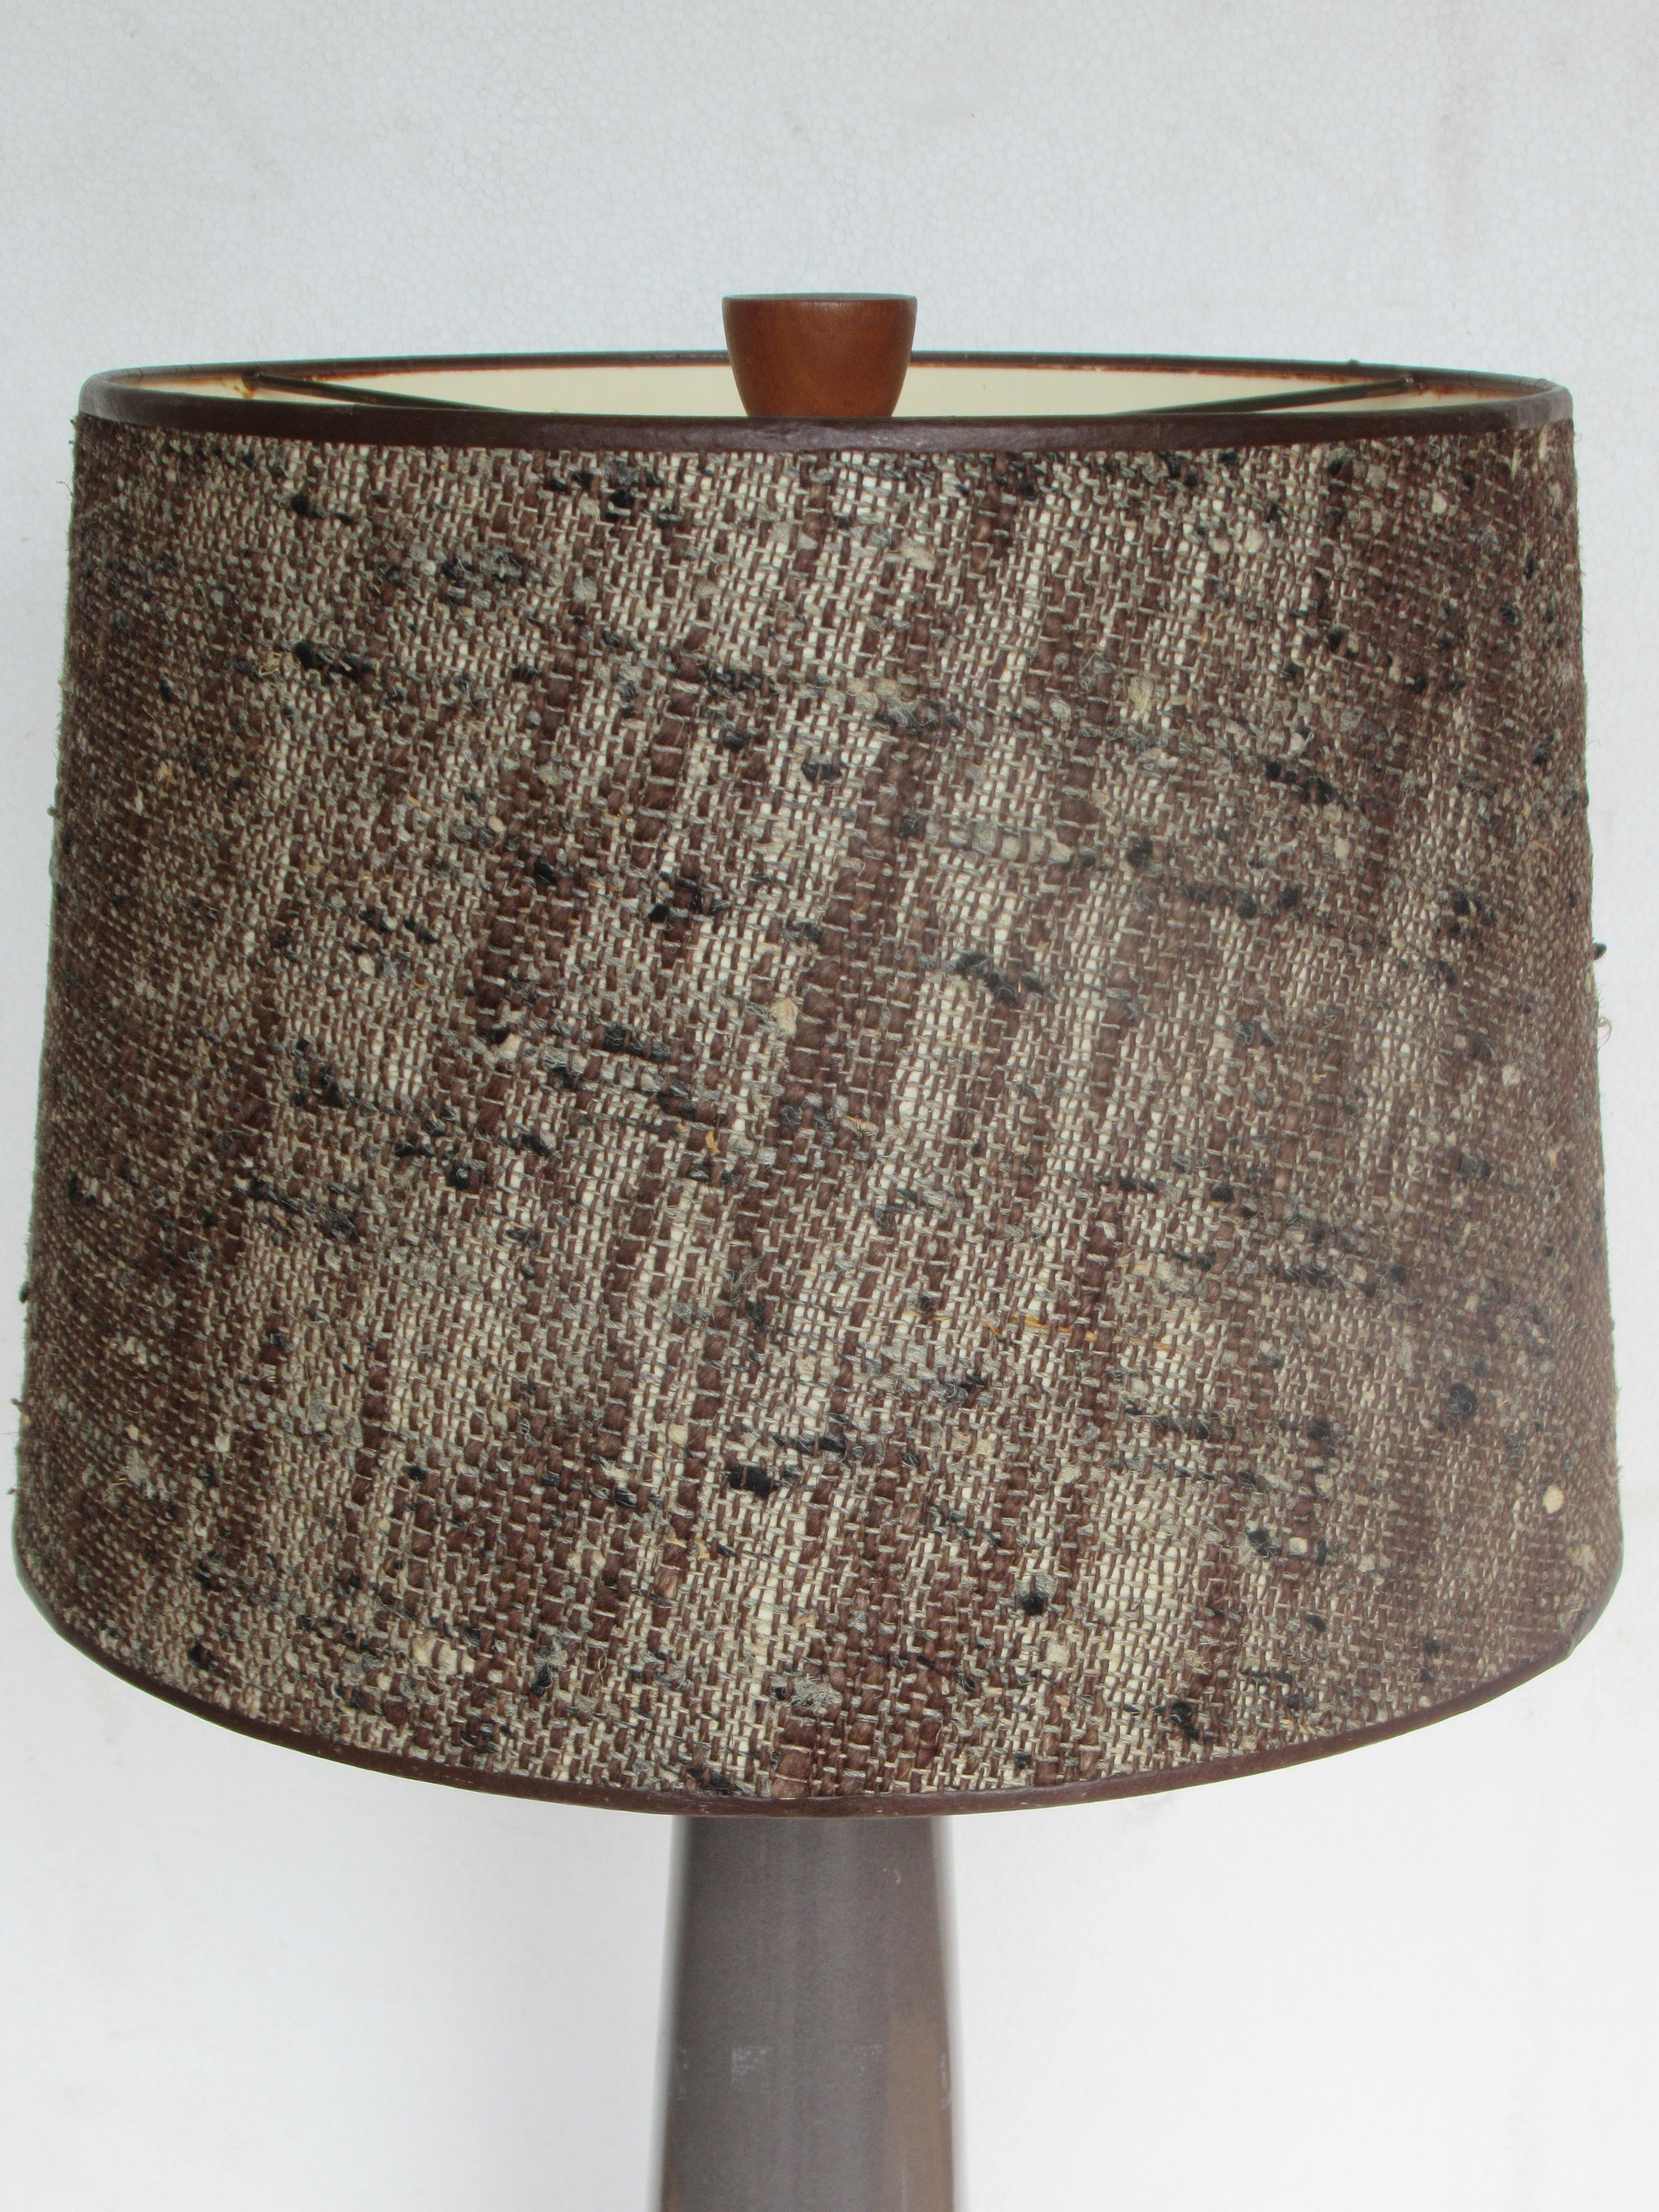 Jane and Gordon Martz Ceramic Table Lamp 2